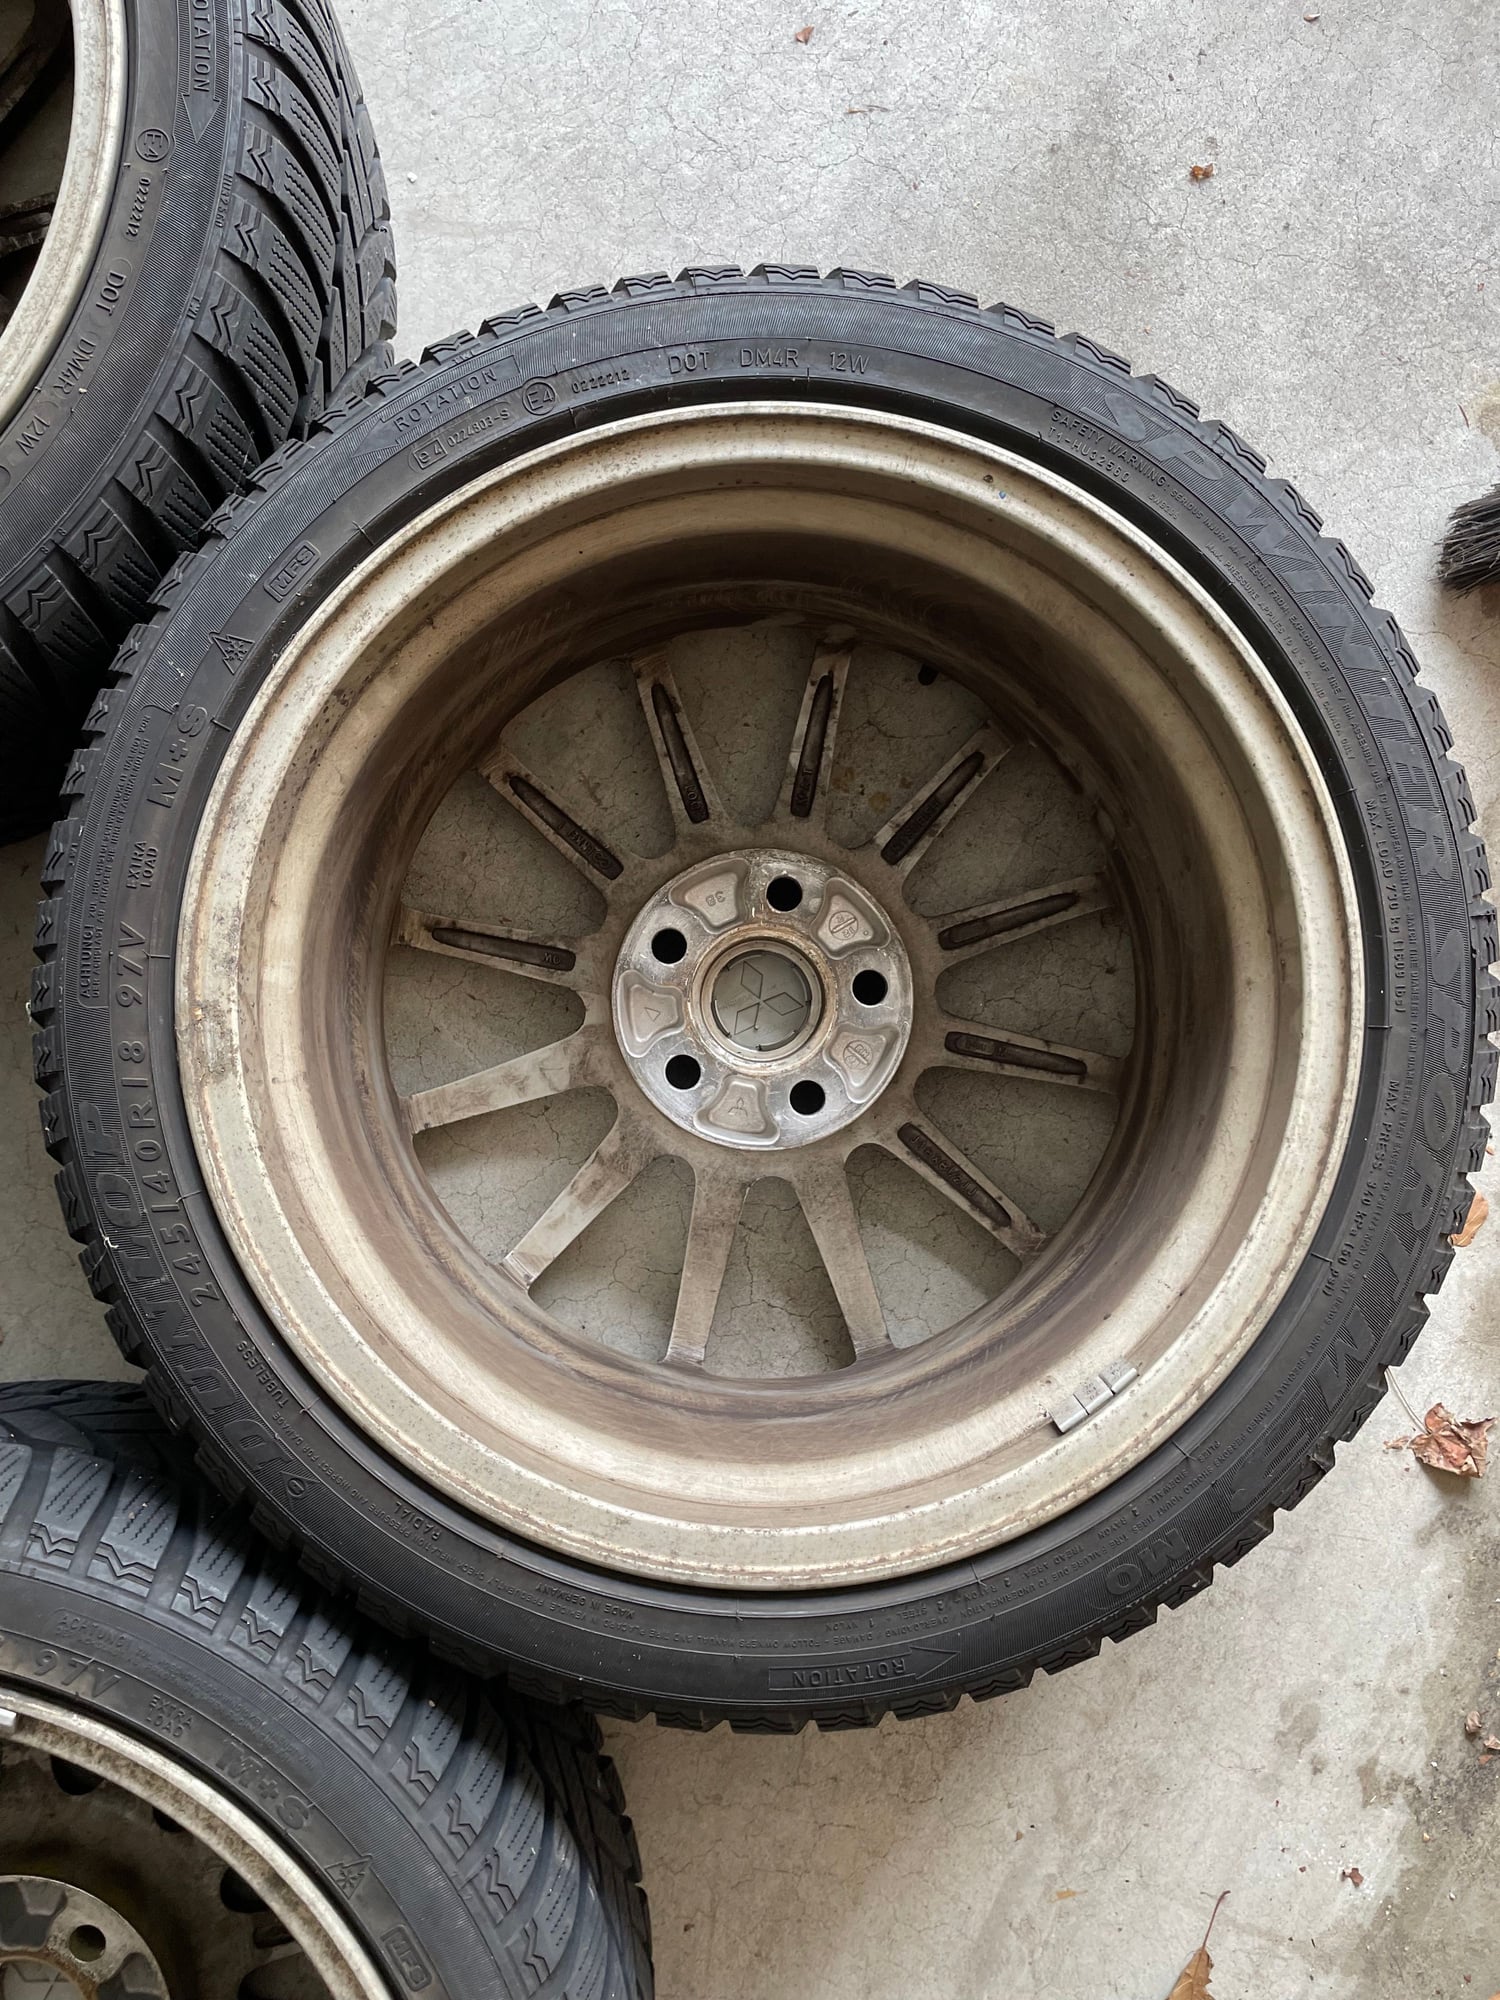 Wheels and Tires/Axles - FS: OEM GSR wheels with Dunlop SP Winter Sport M3 tires - Used - 2008 to 2016 Mitsubishi Lancer Evolution - Belleville, NJ 07109, United States